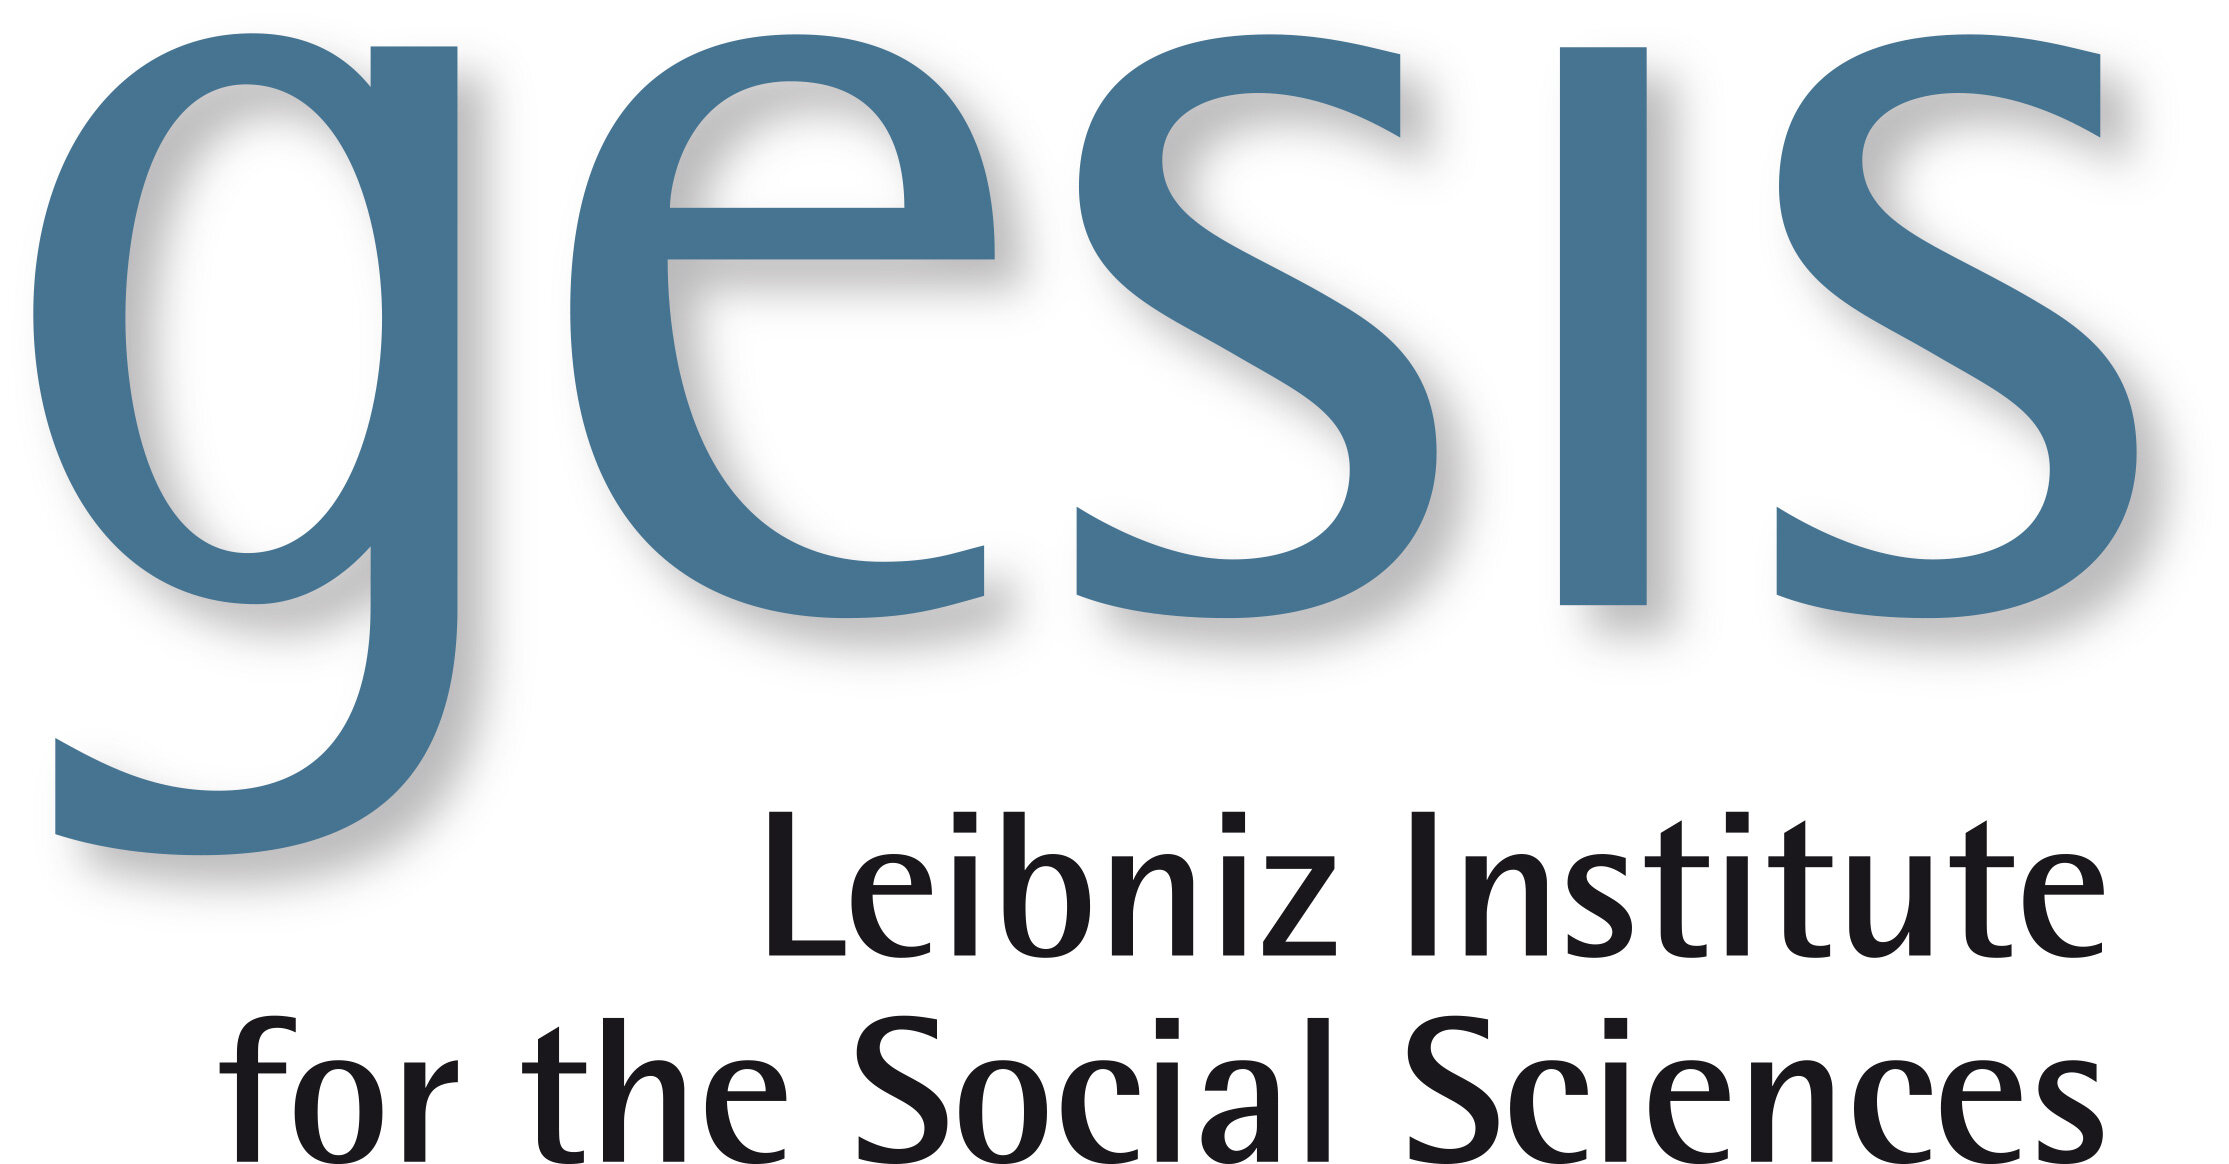 Leibniz Institute for the Social Sciences